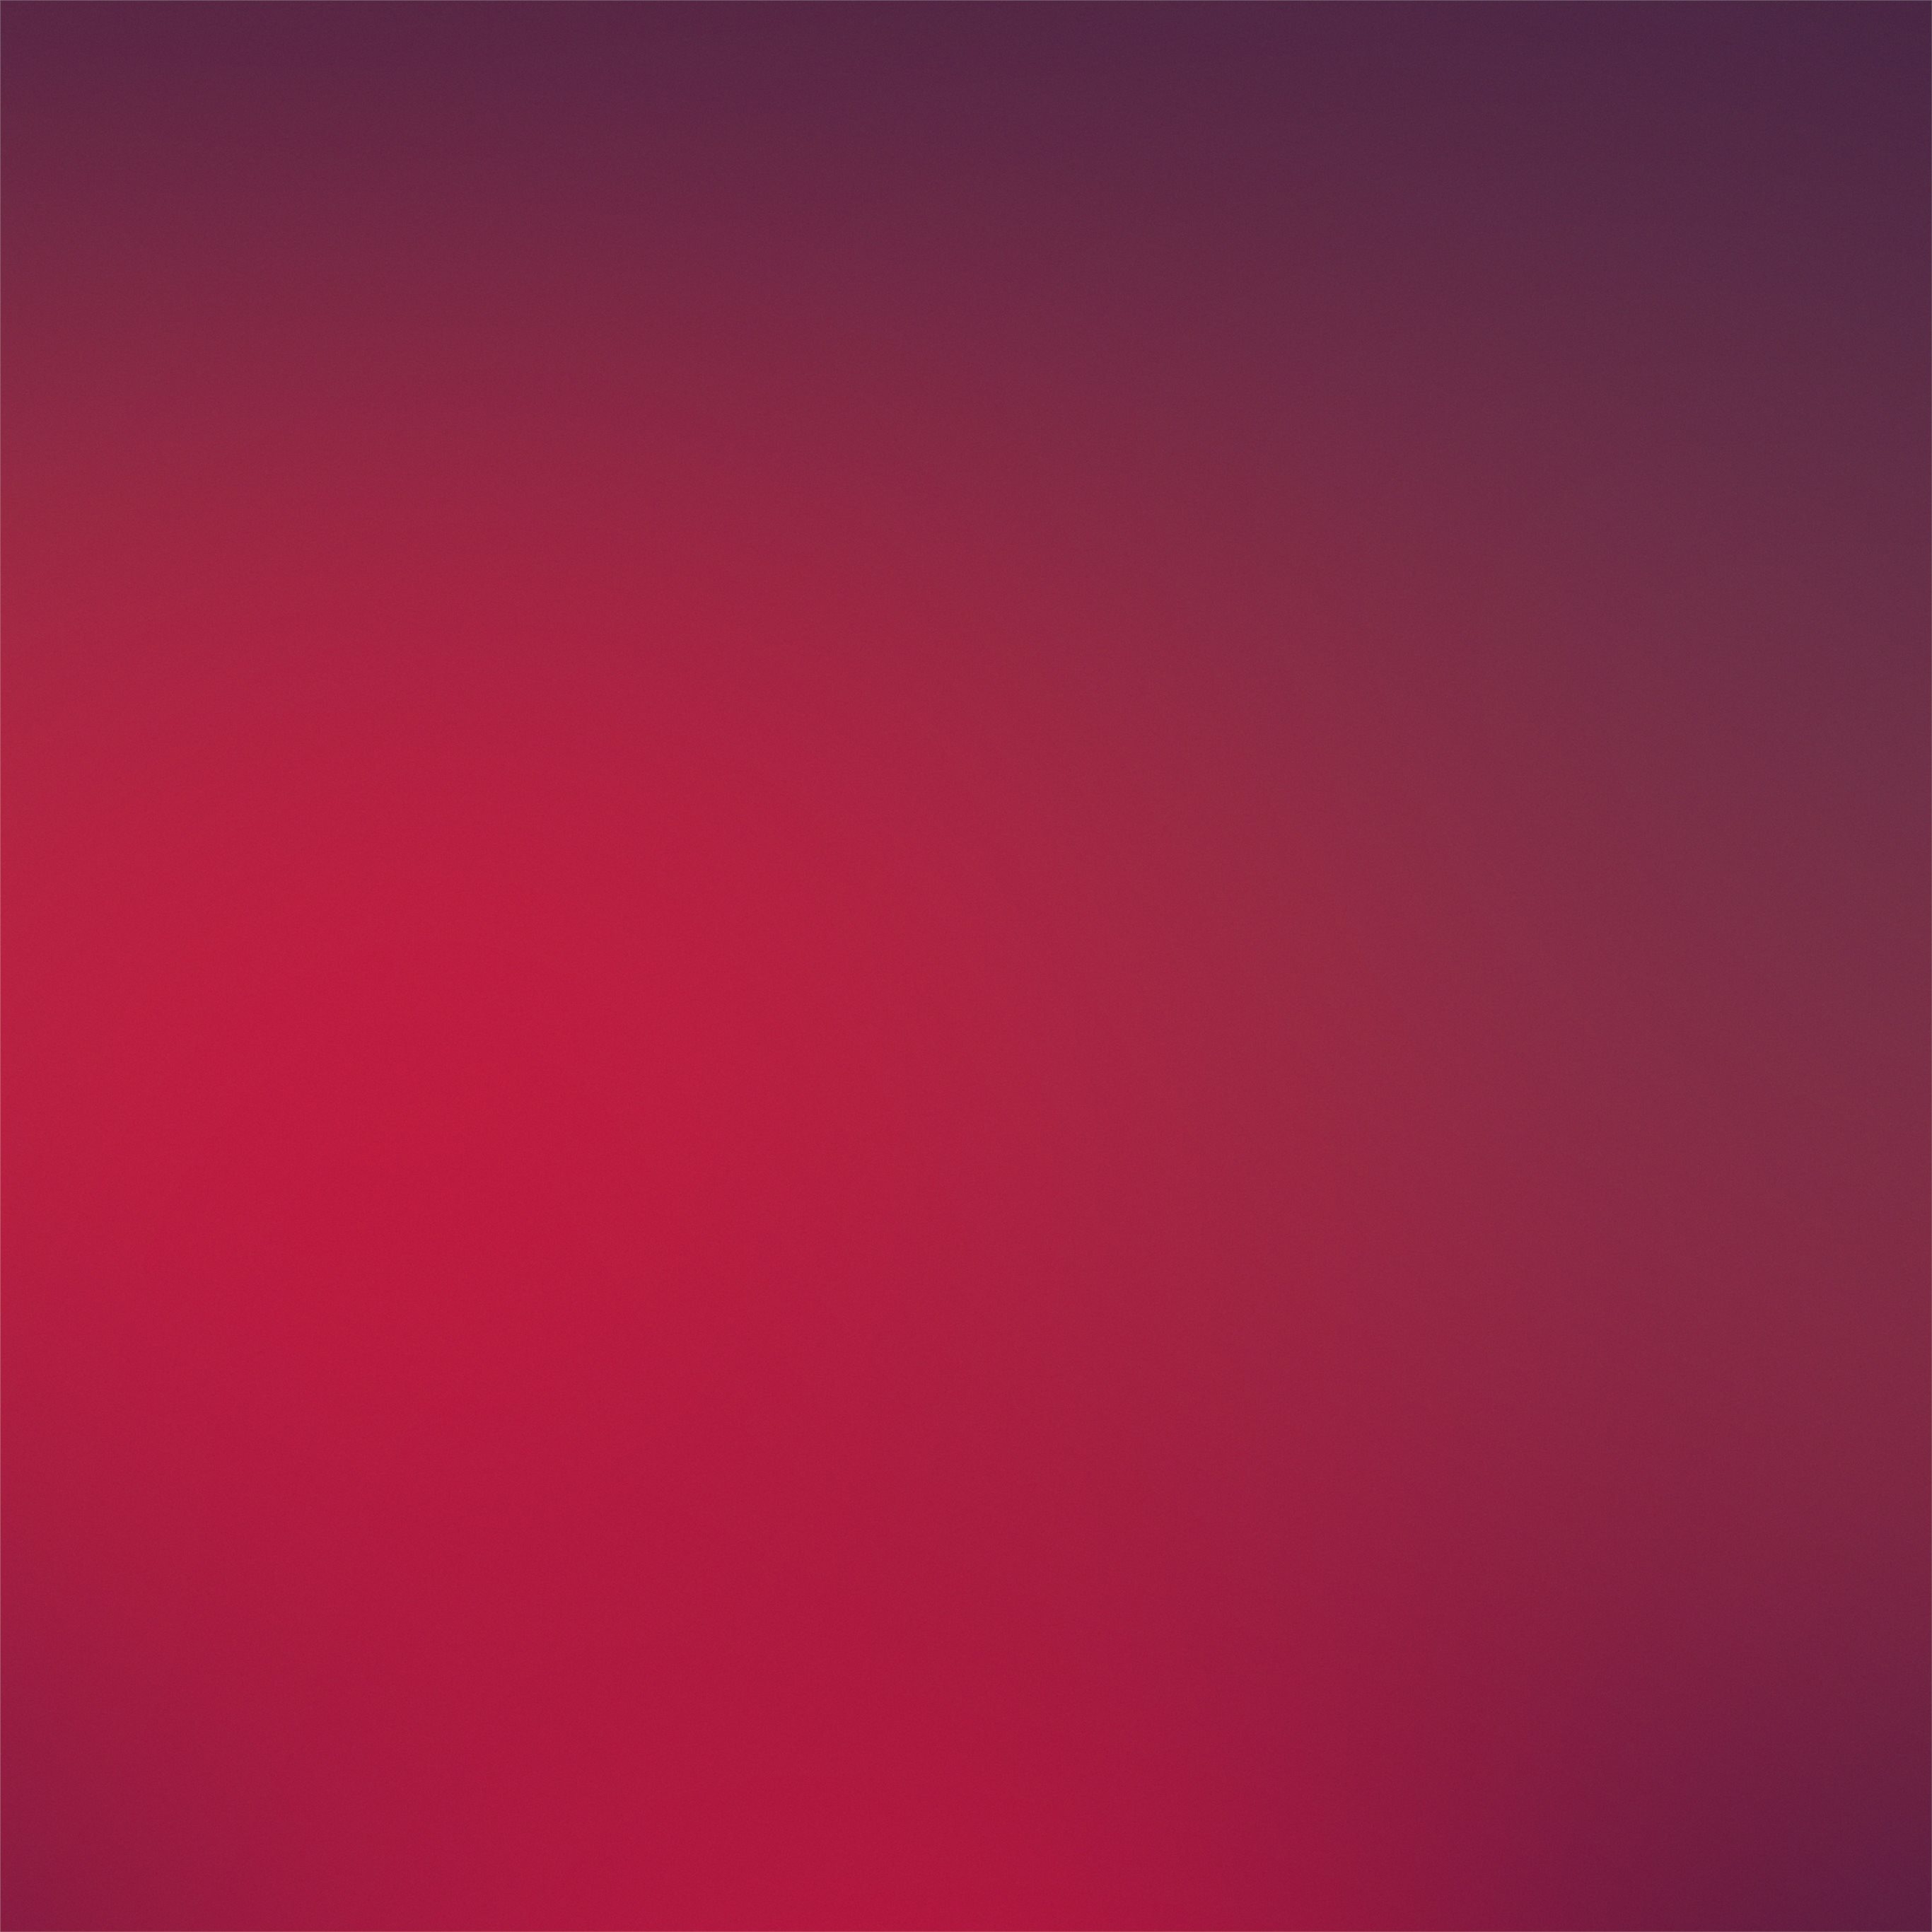 red lava abstract blur 4k iPad Wallpaper Free Download